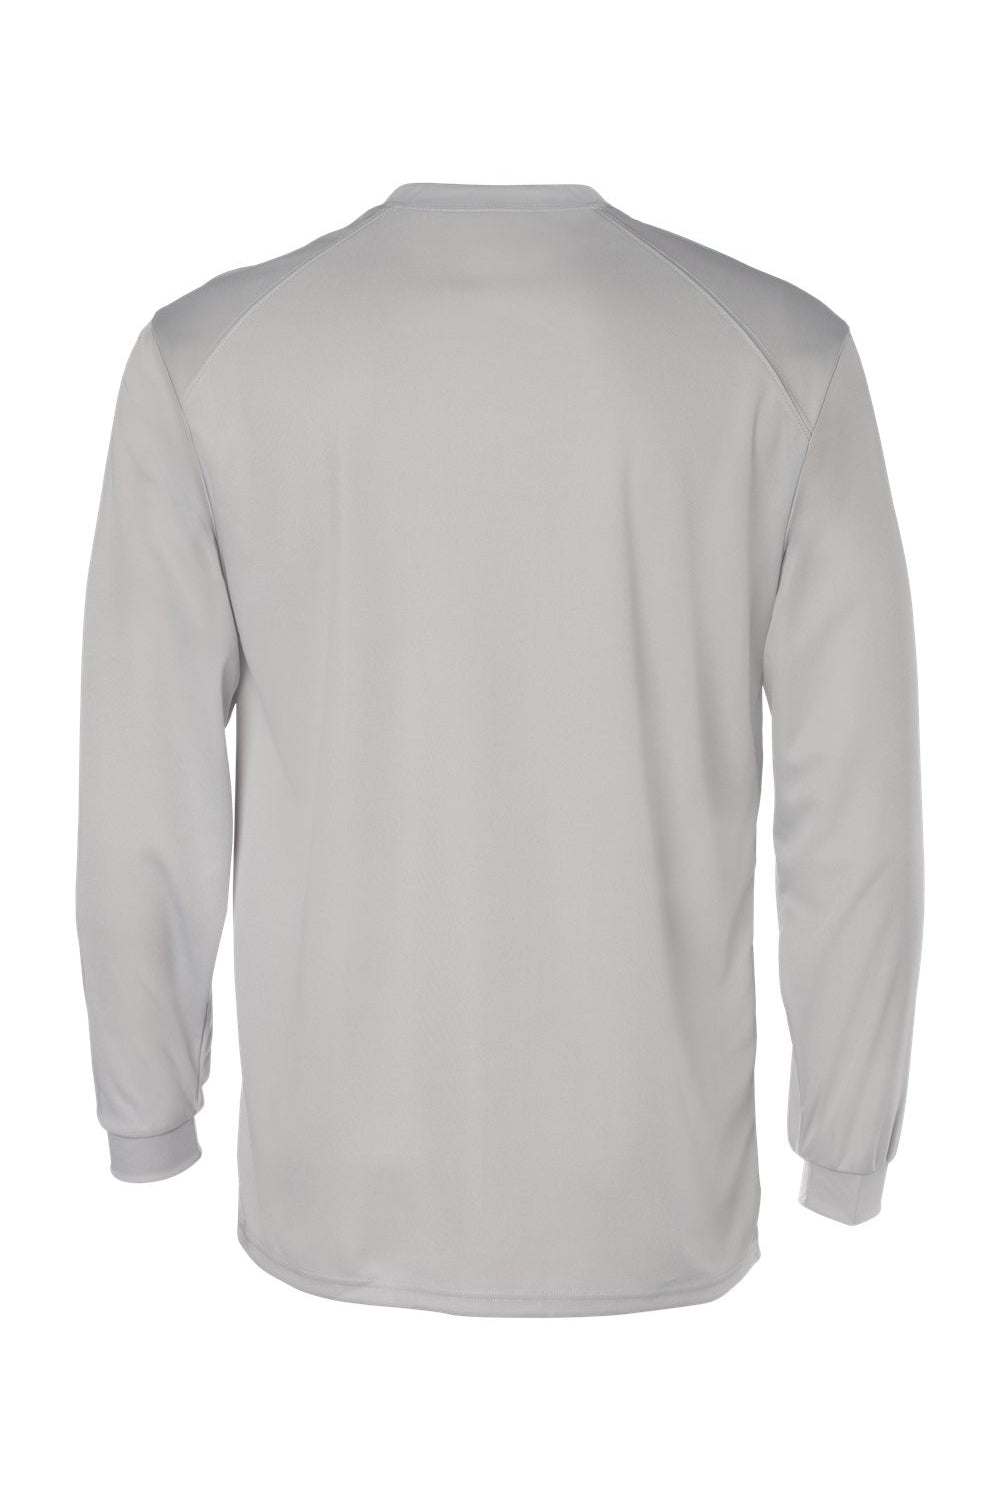 Badger 4104 Mens B-Core Moisture Wicking Long Sleeve Crewneck T-Shirt Silver Grey Flat Back